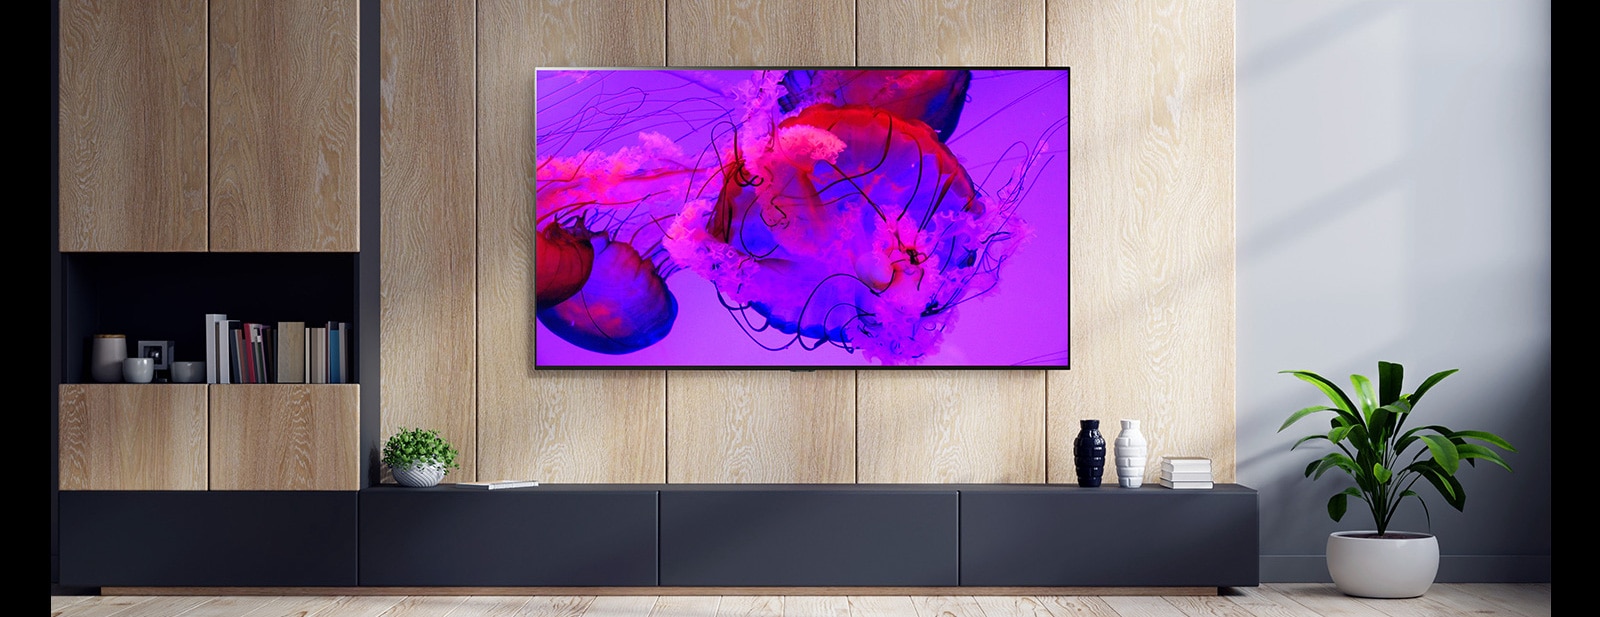 LG OLED evo Z3 77 inch 4K Smart TV | LG Australia